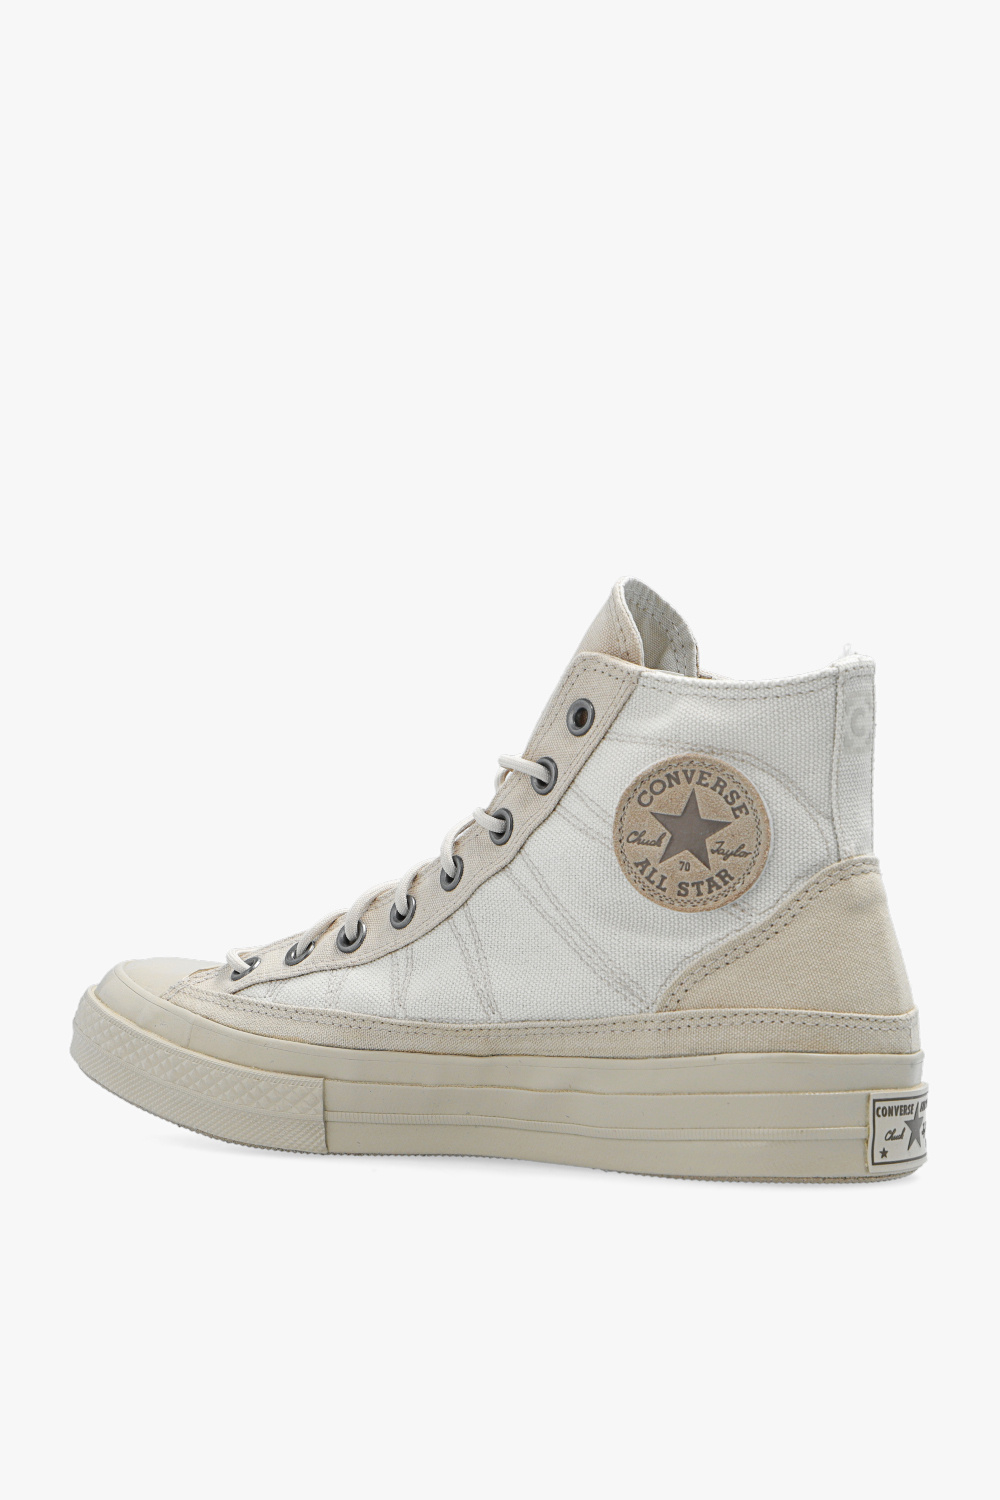 converse short ‘Chuck 70’ high-top sneakers